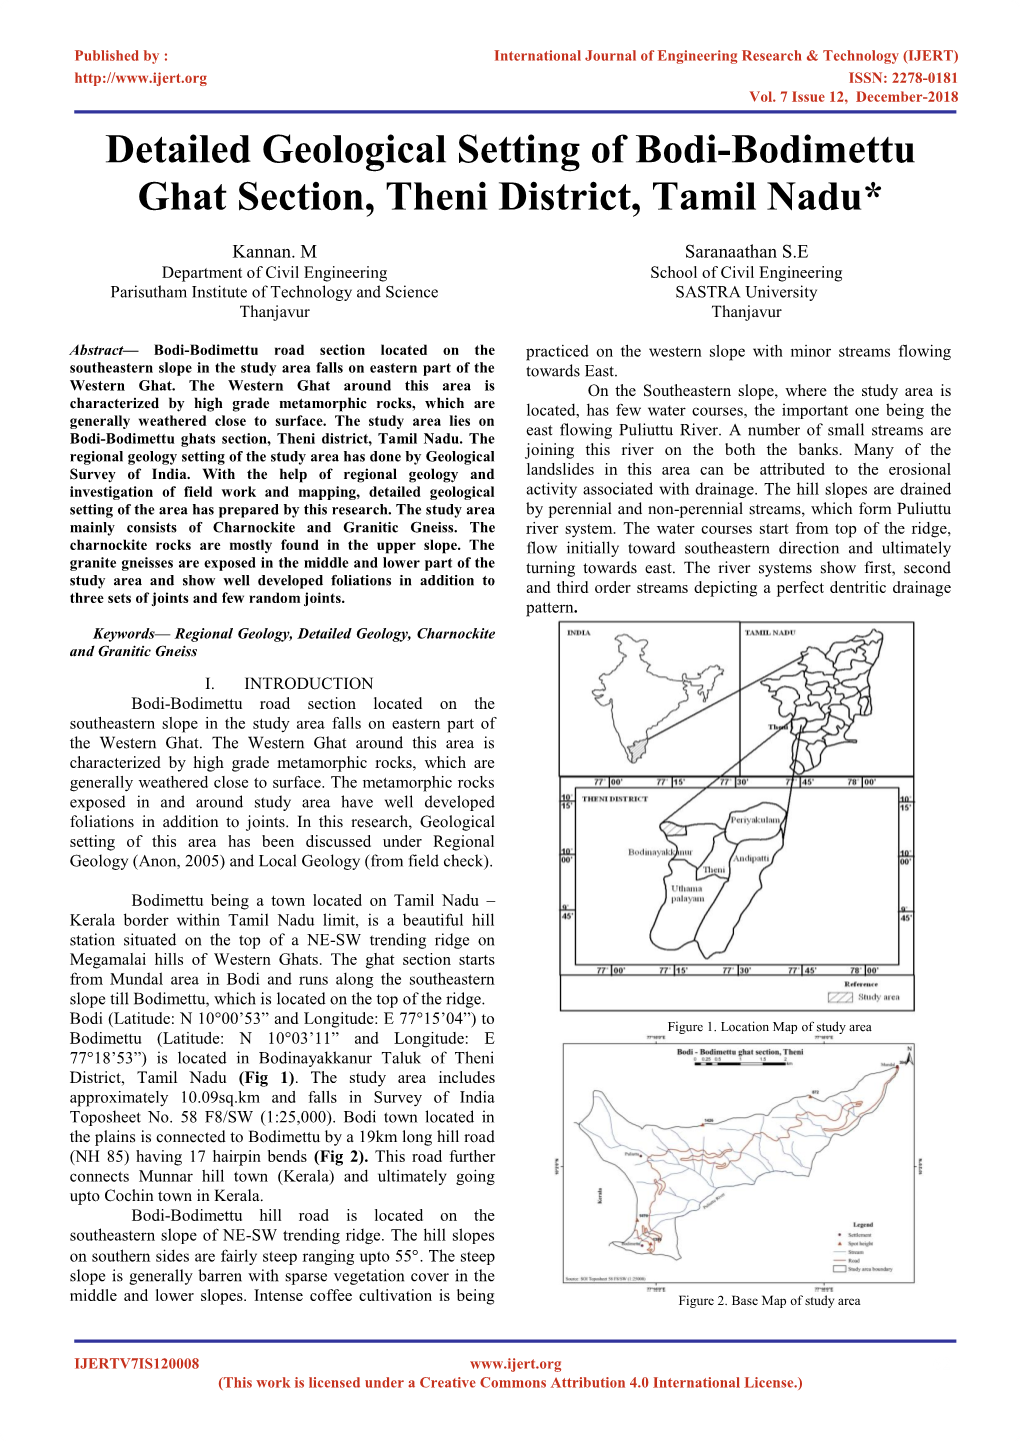 Detailed Geological Setting of Bodi-Bodimettu Ghat Section, Theni District, Tamil Nadu*